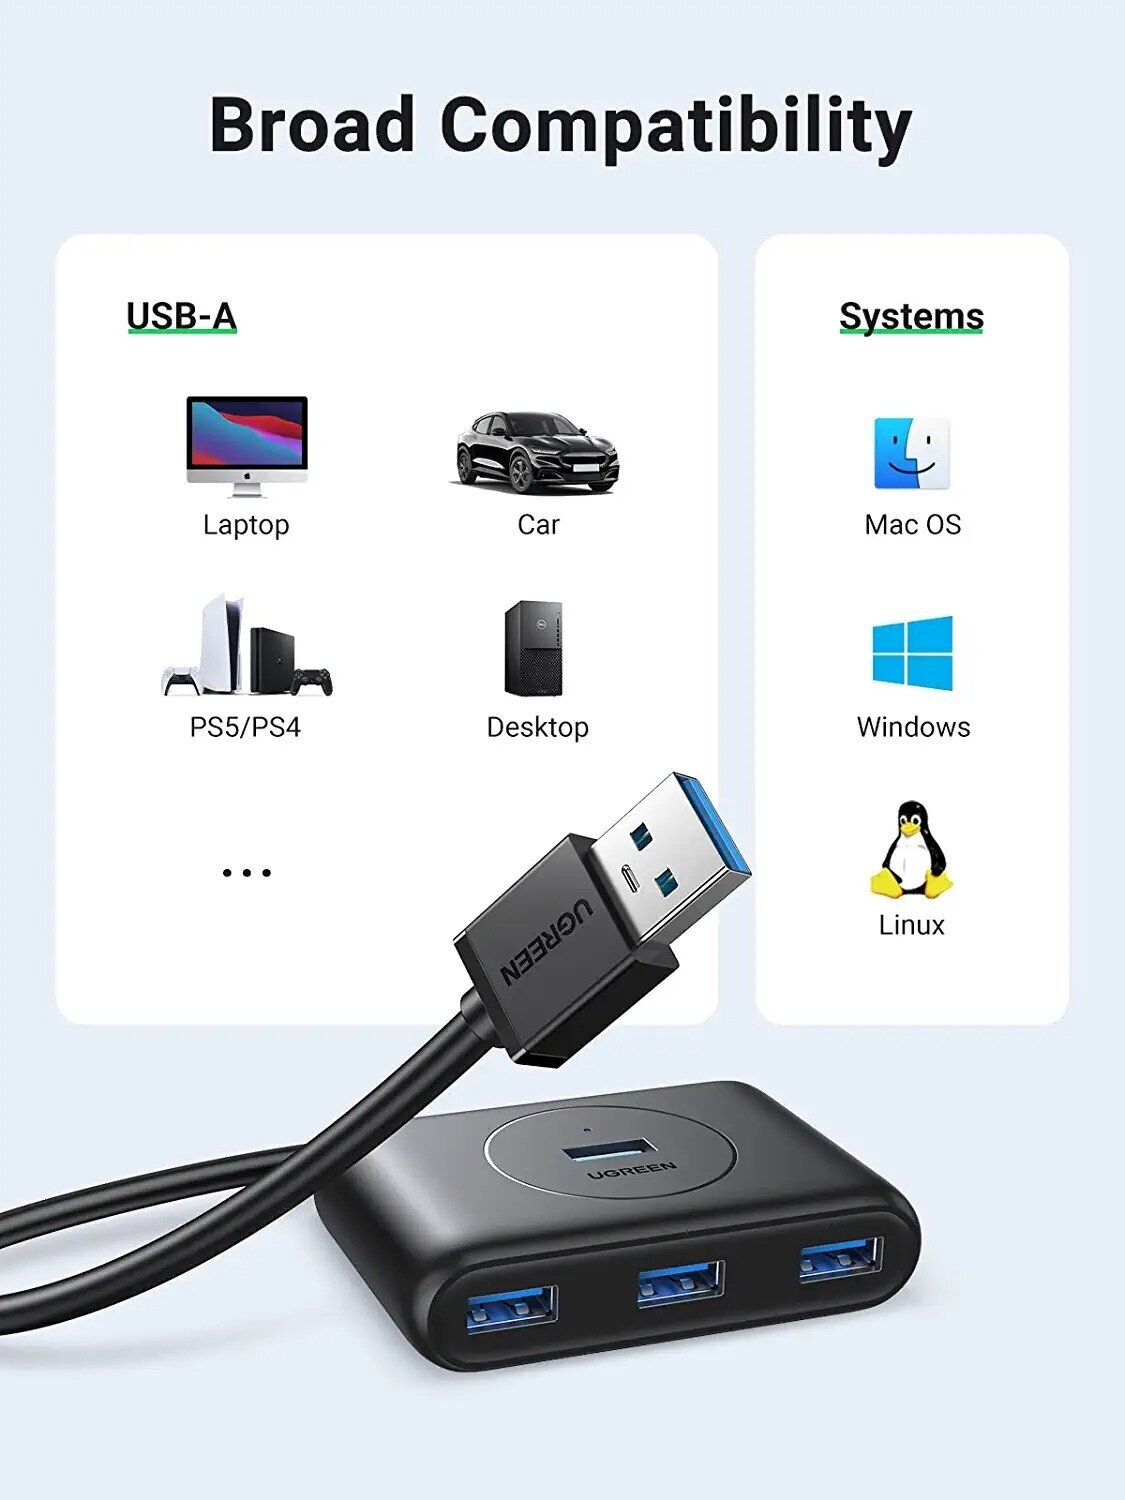 Хаб USB Ugreen CR113 USB 3.0 Hub 0.5m Black 20290